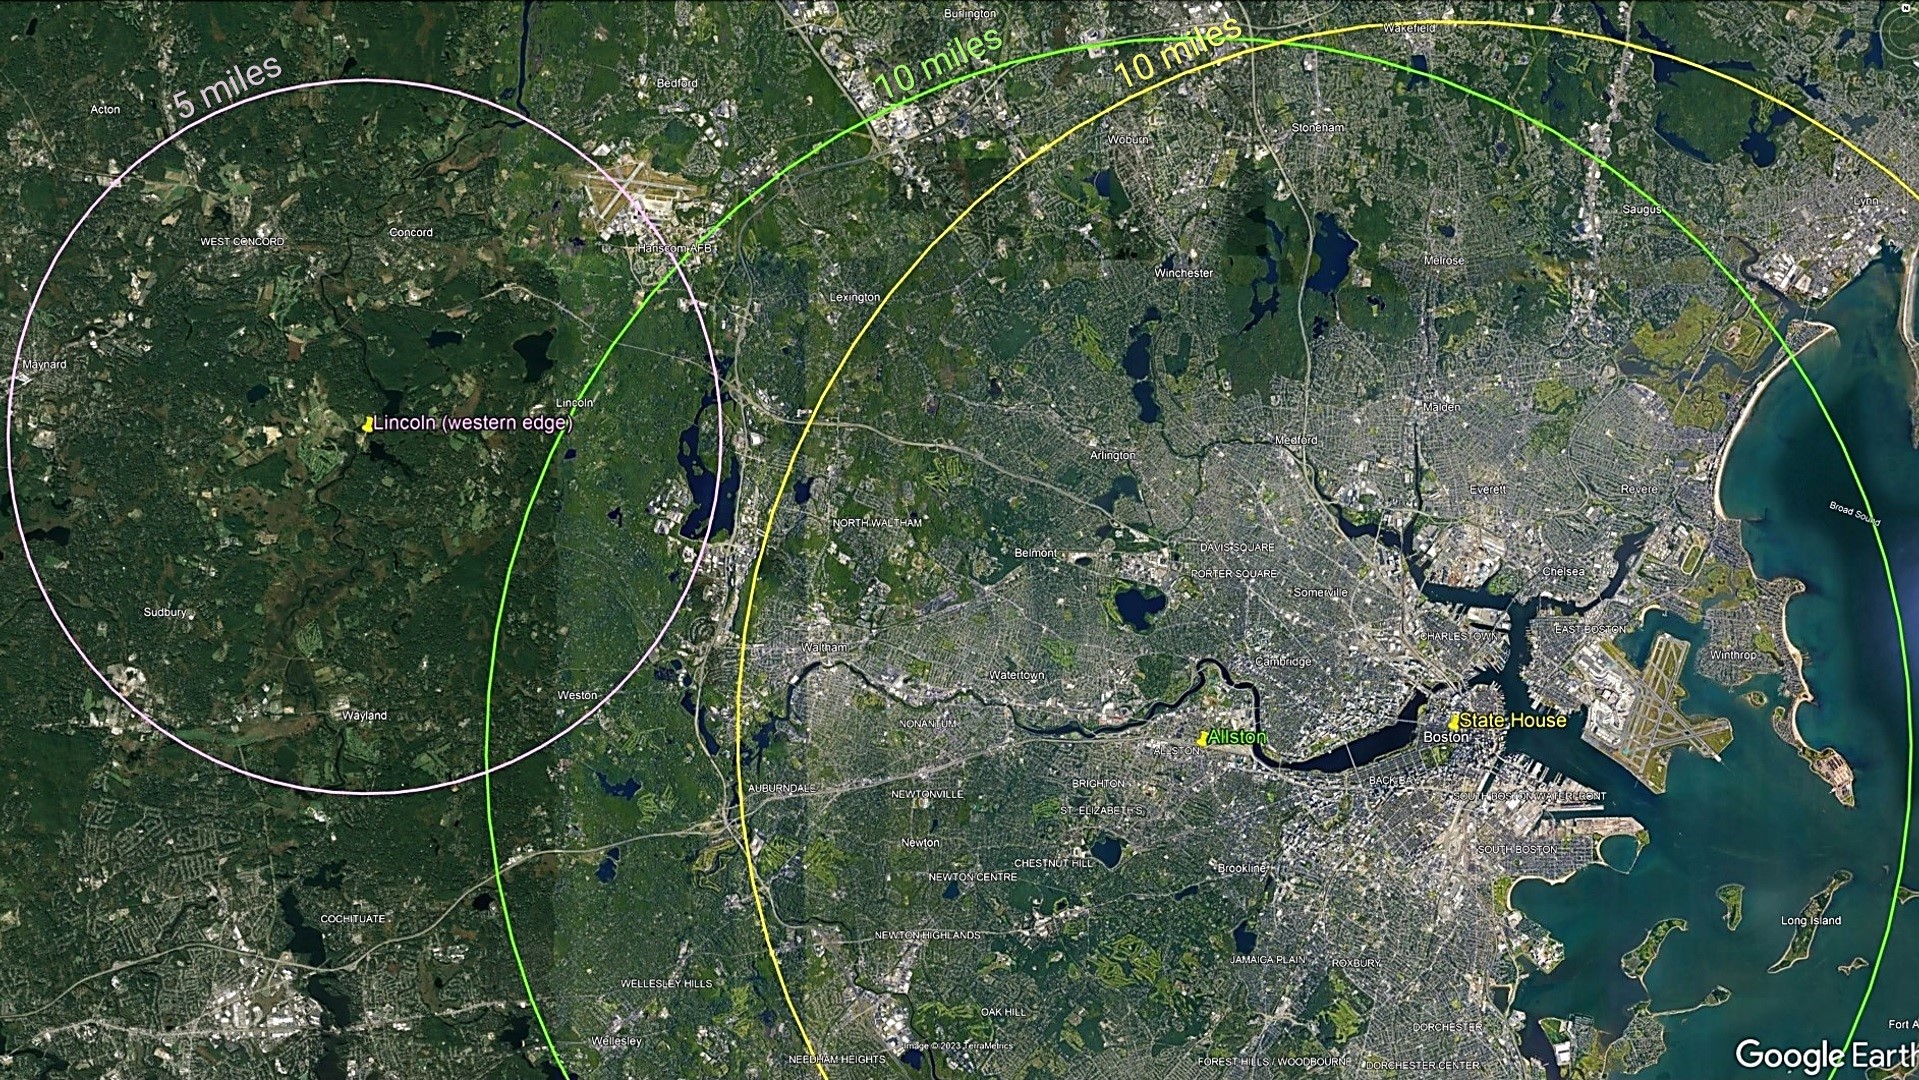 TheLastofUs Boston-Lincoln gorge vicinity estimation.jpg